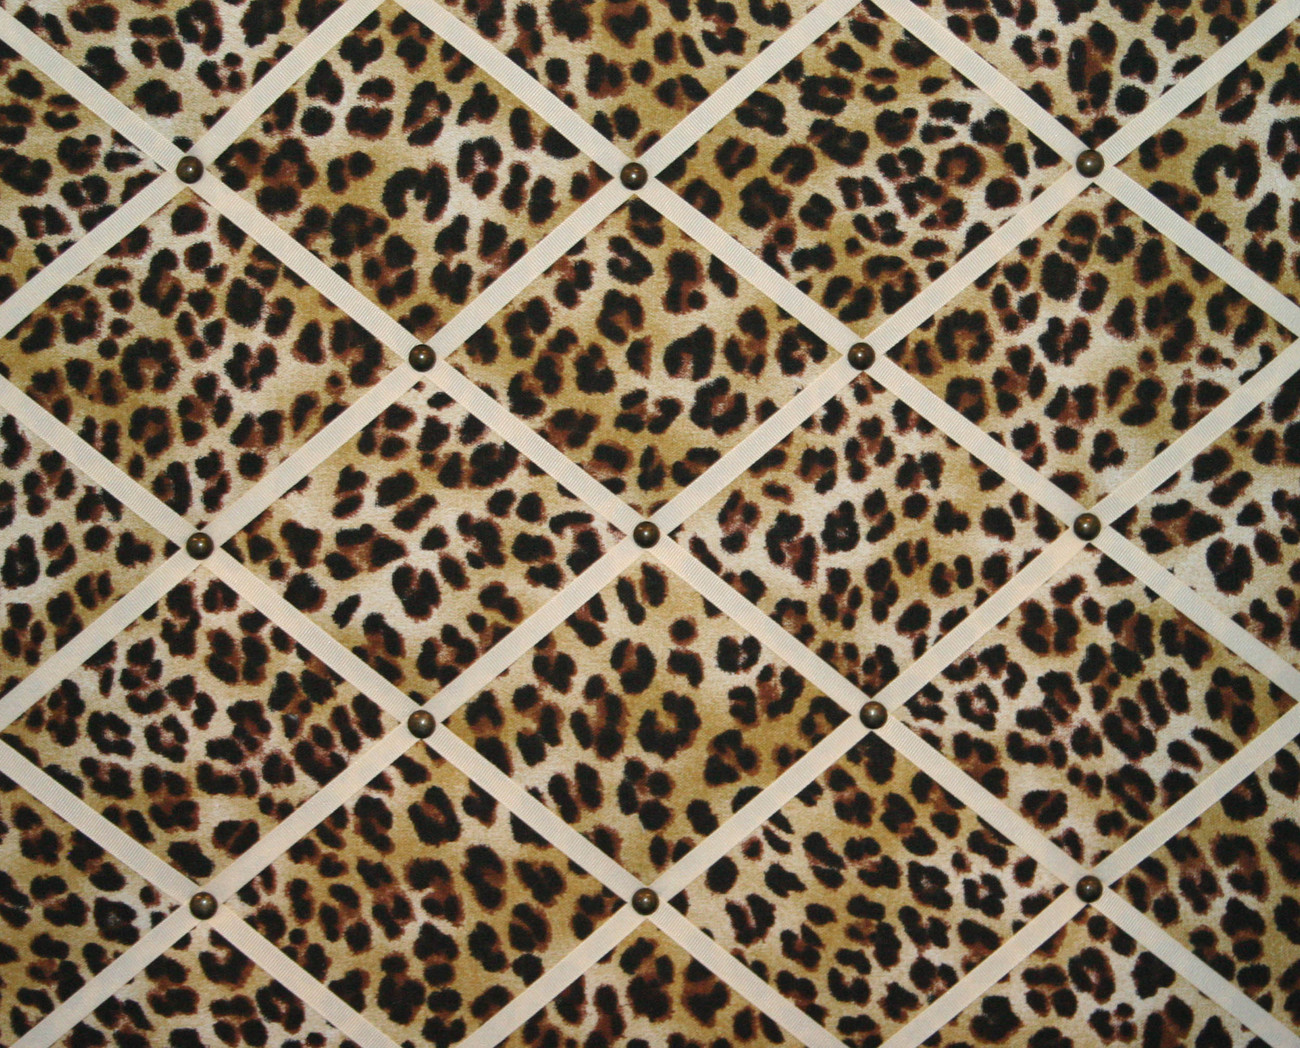 Cheetah Print Wallpaper Leopard cheetah print cake